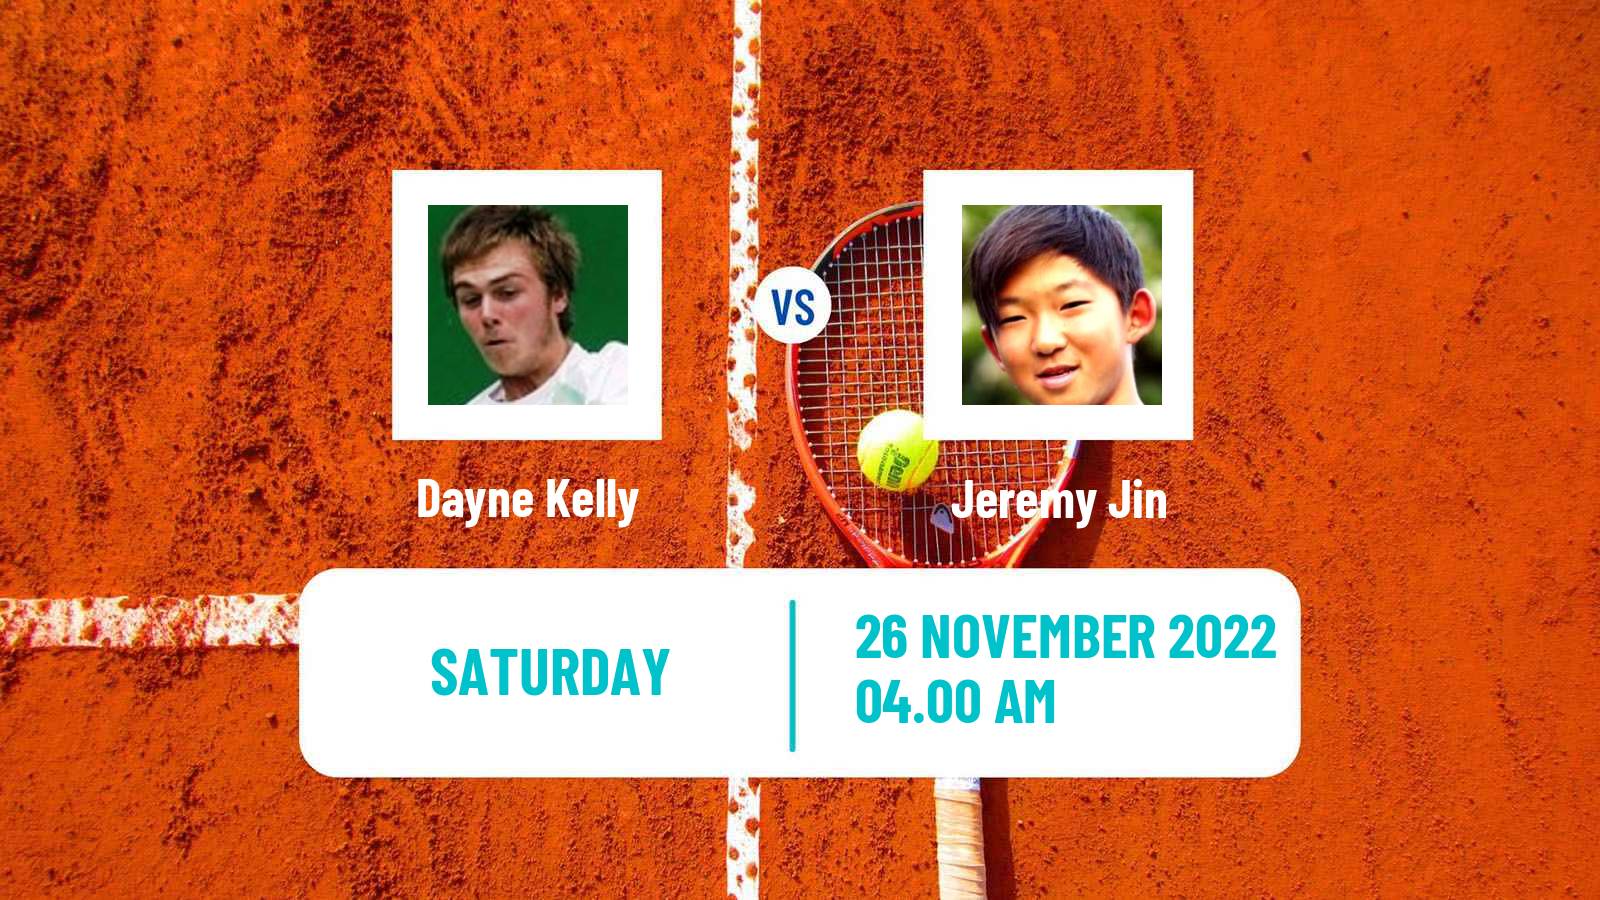 Tennis ITF Tournaments Dayne Kelly - Jeremy Jin